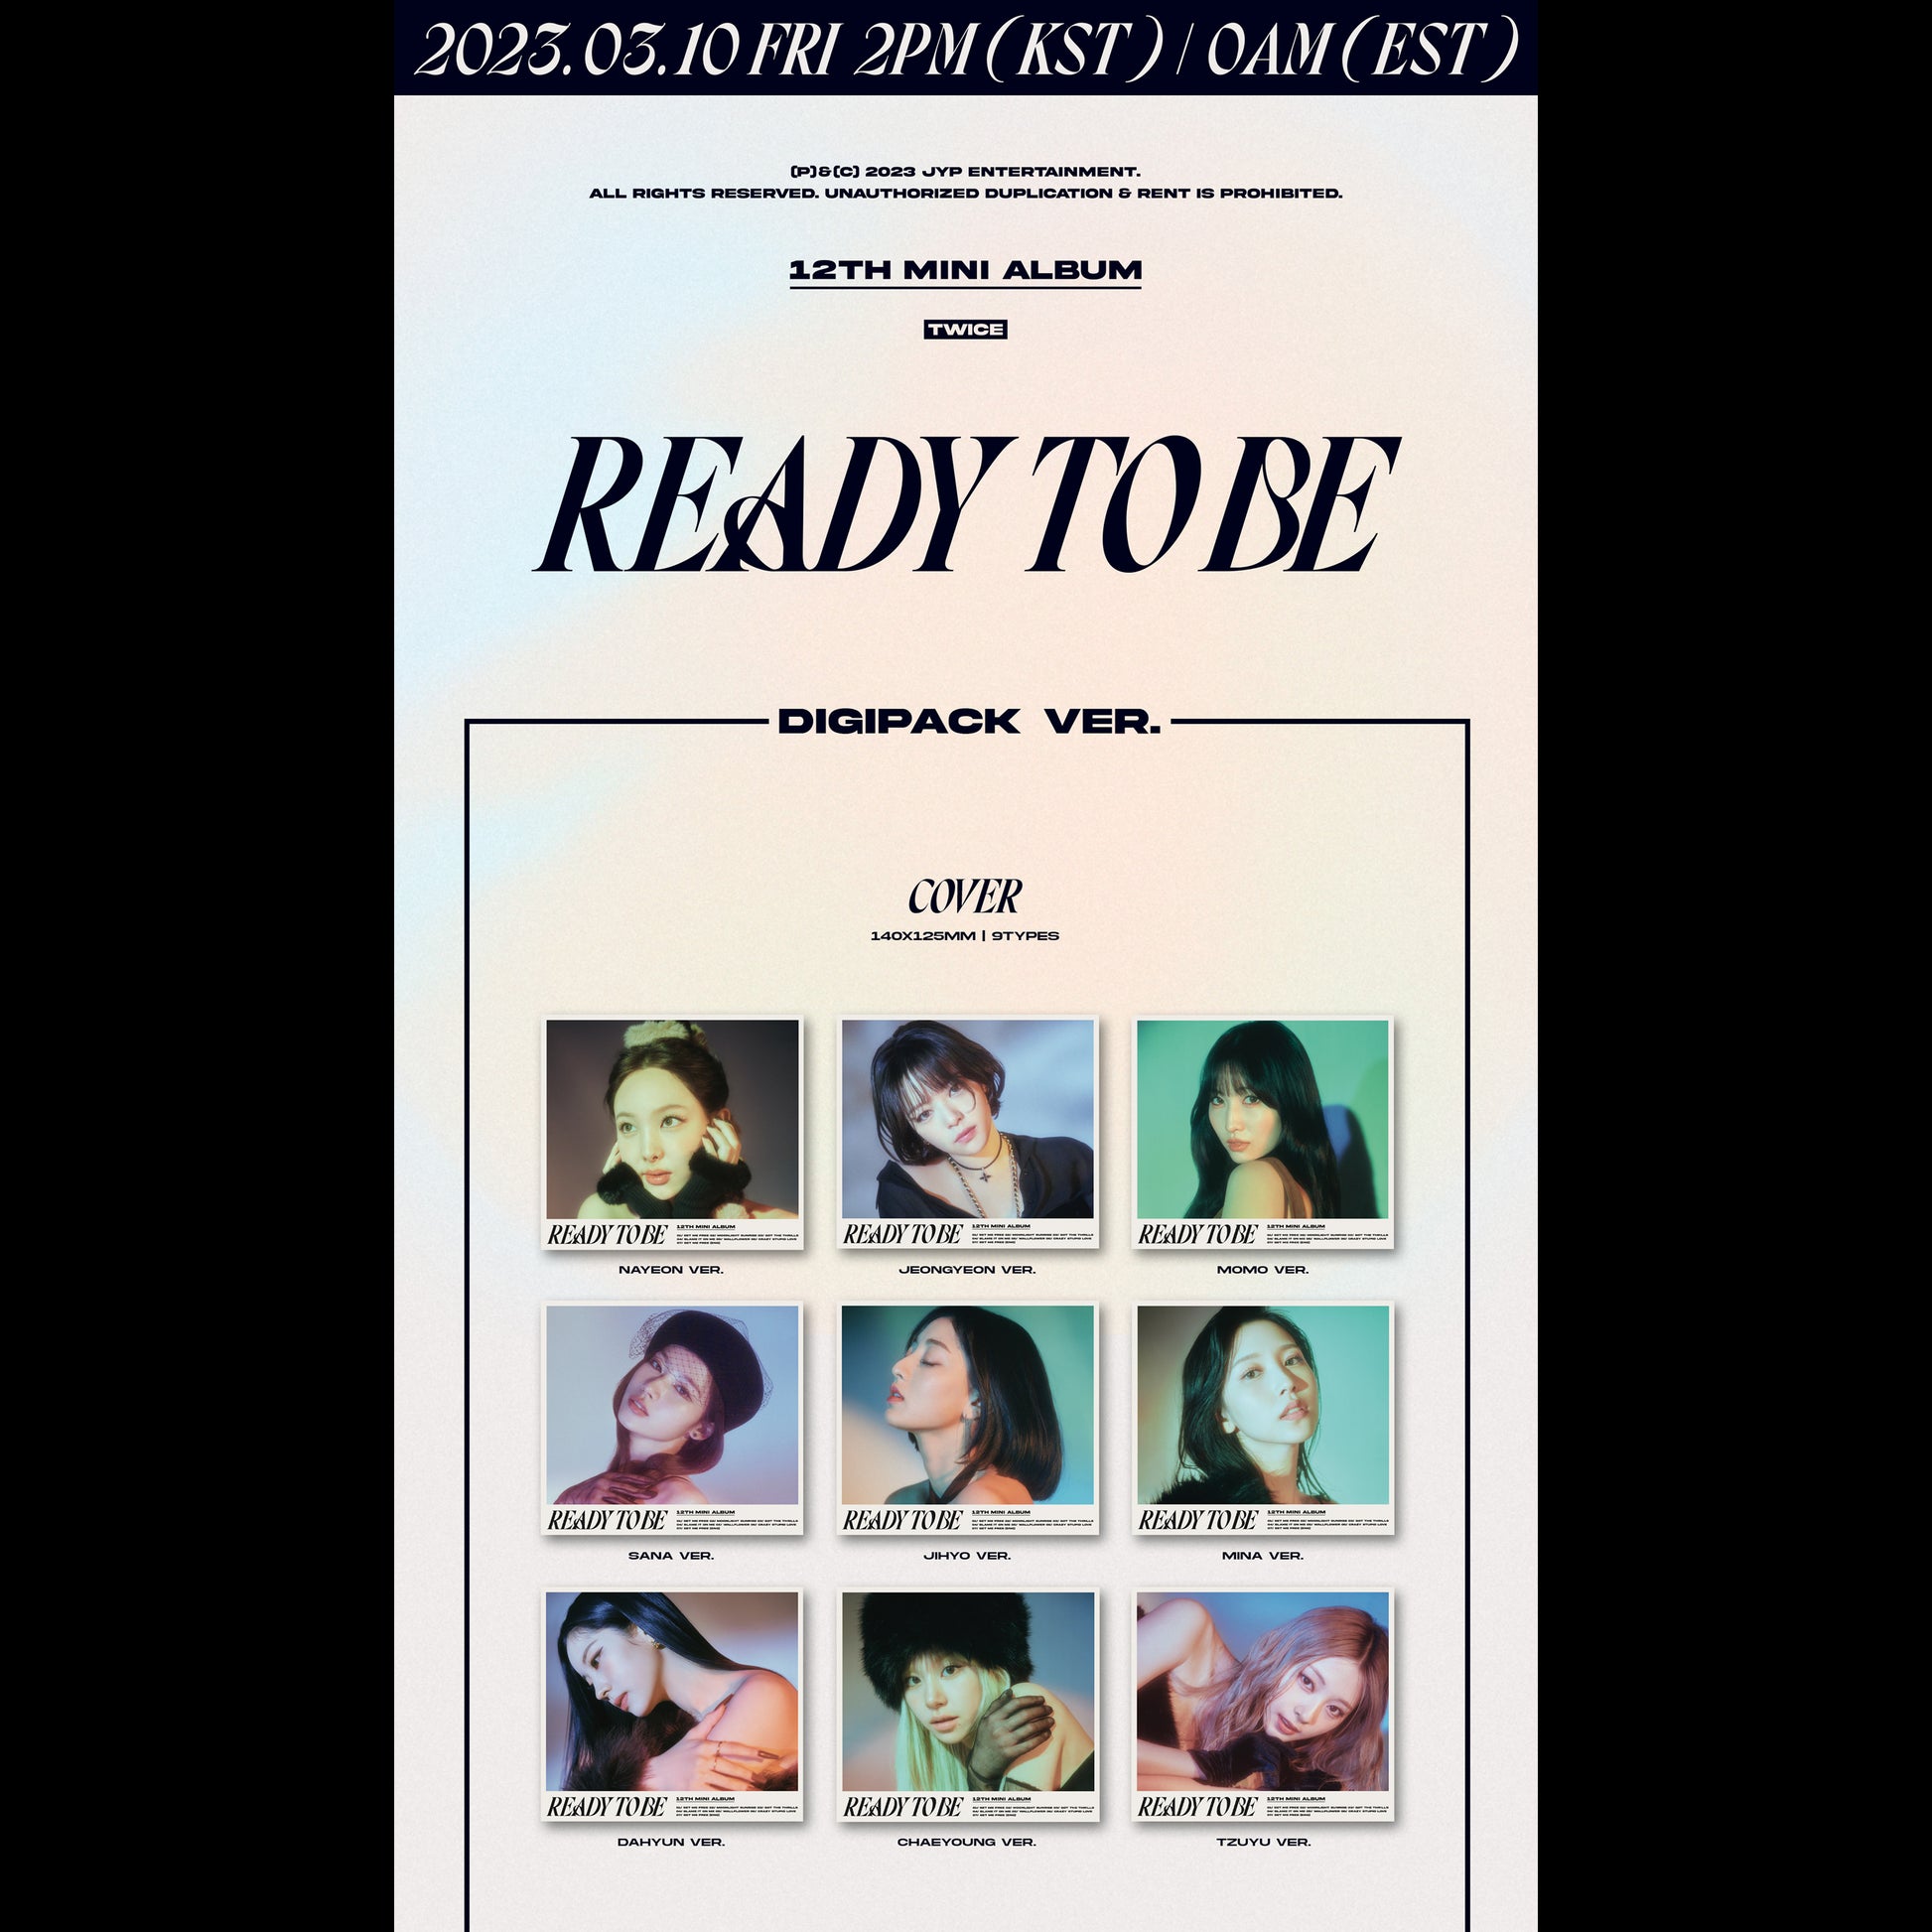 TWICE 트와이스 - 2nd Mini-Album 'PAGE TWO' – KLOUD K-Pop Store